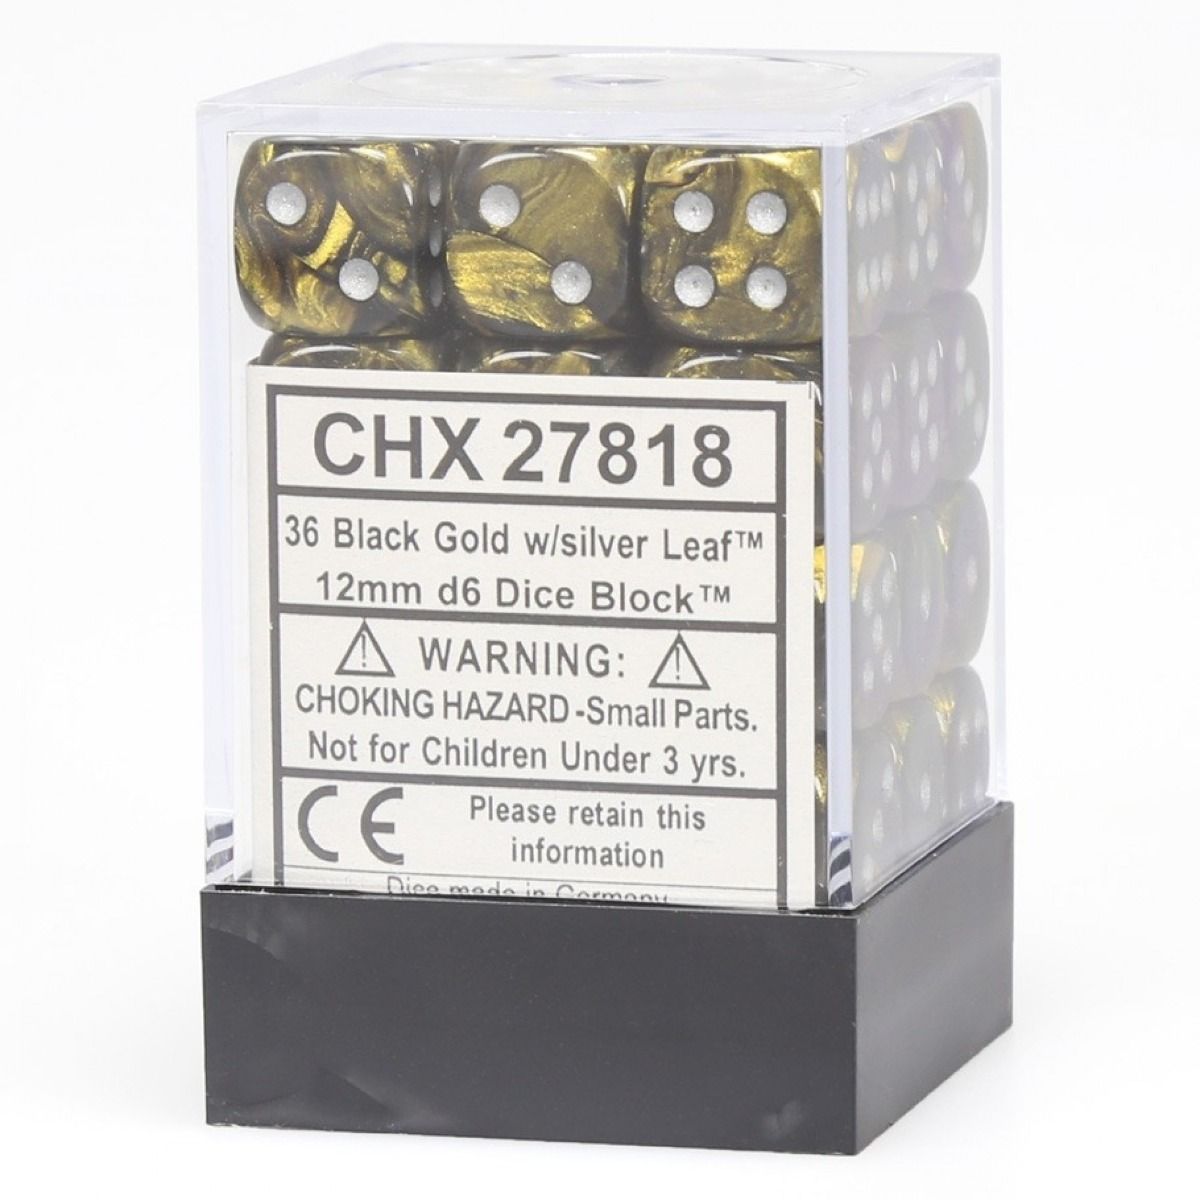 CHX 27818 Leaf 12mm d6 Black Gold/Silver Block (36)